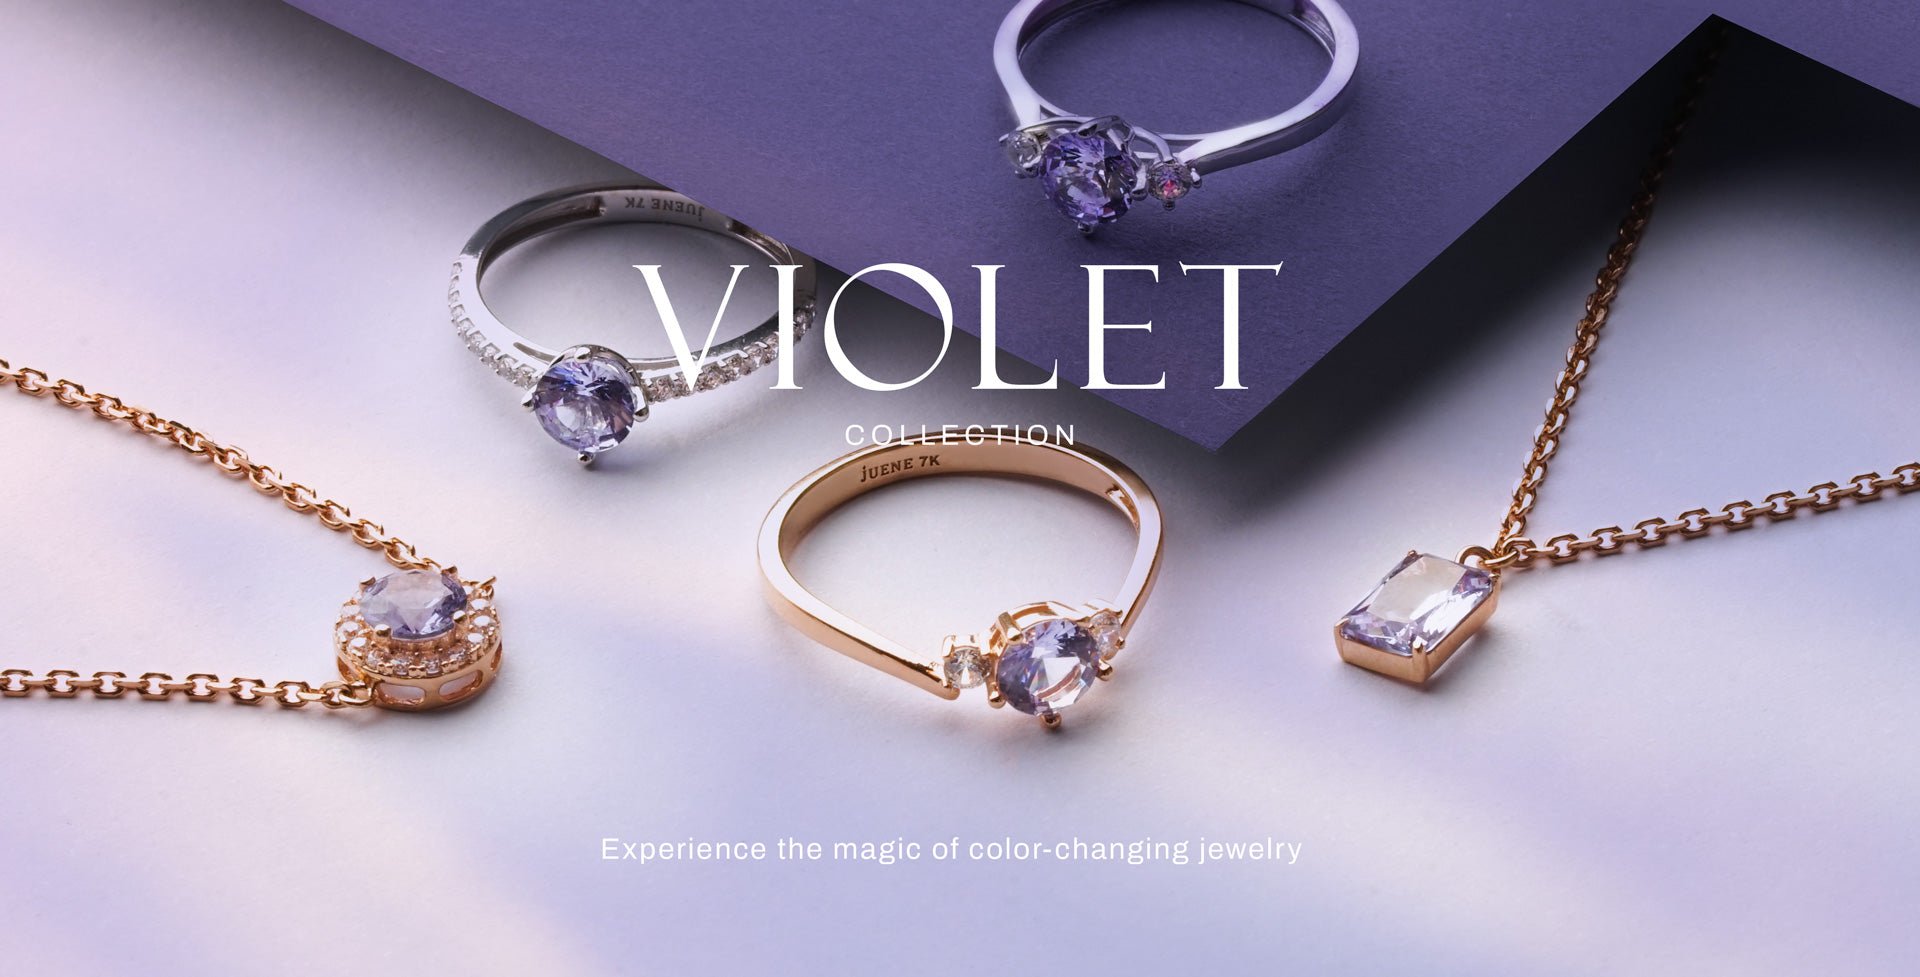 Juene Jewelry 7k - Violet Collection - Juene Jewelry